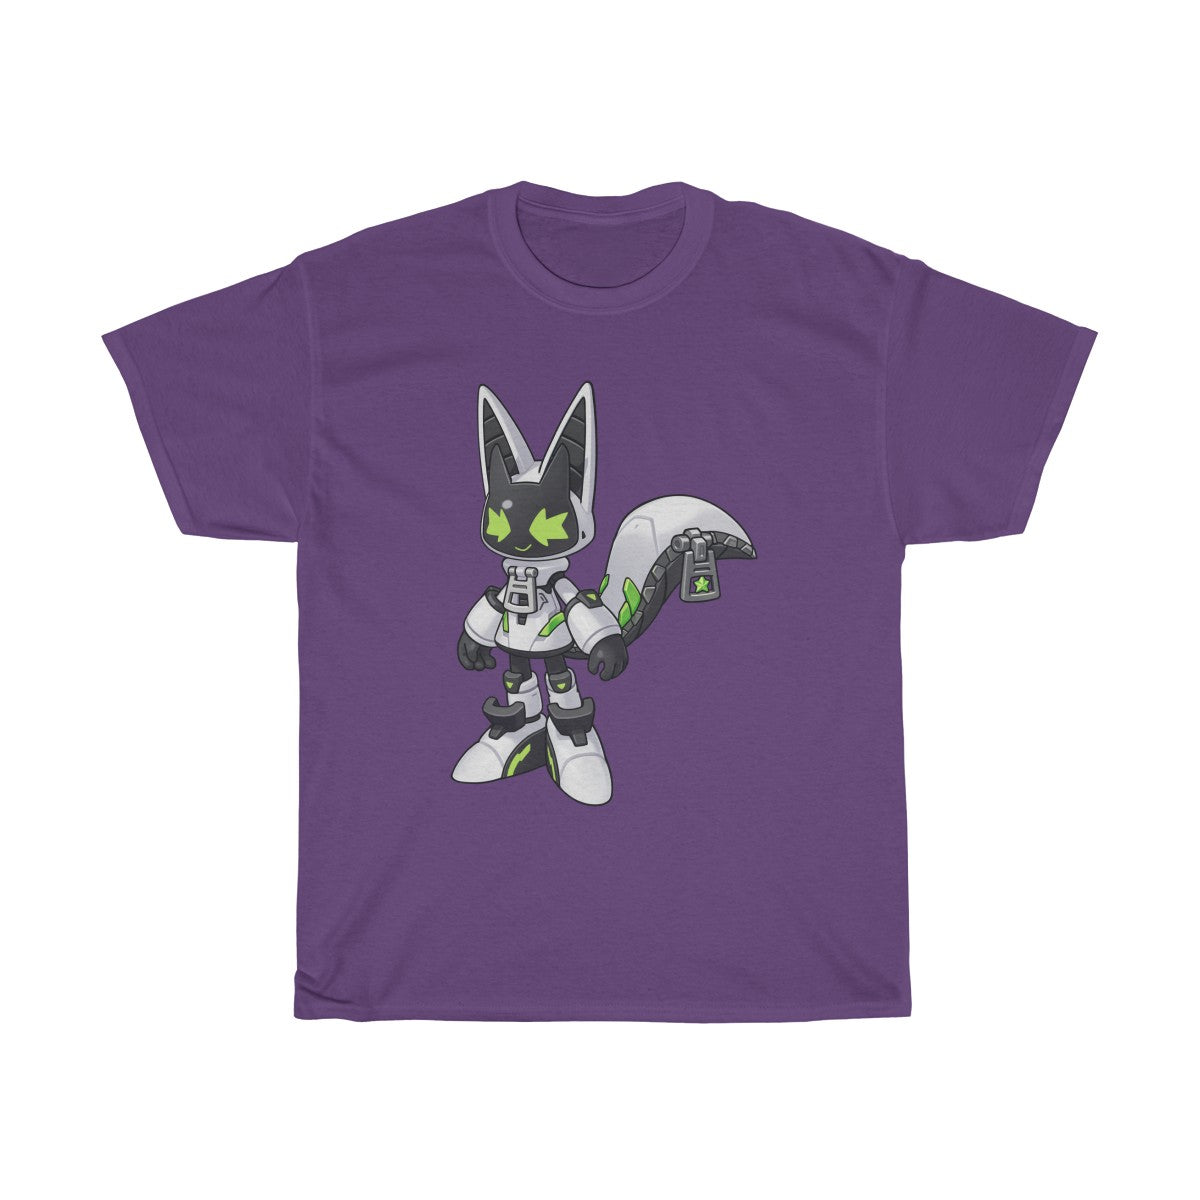 Yandroid - T-Shirt T-Shirt Lordyan Purple S 